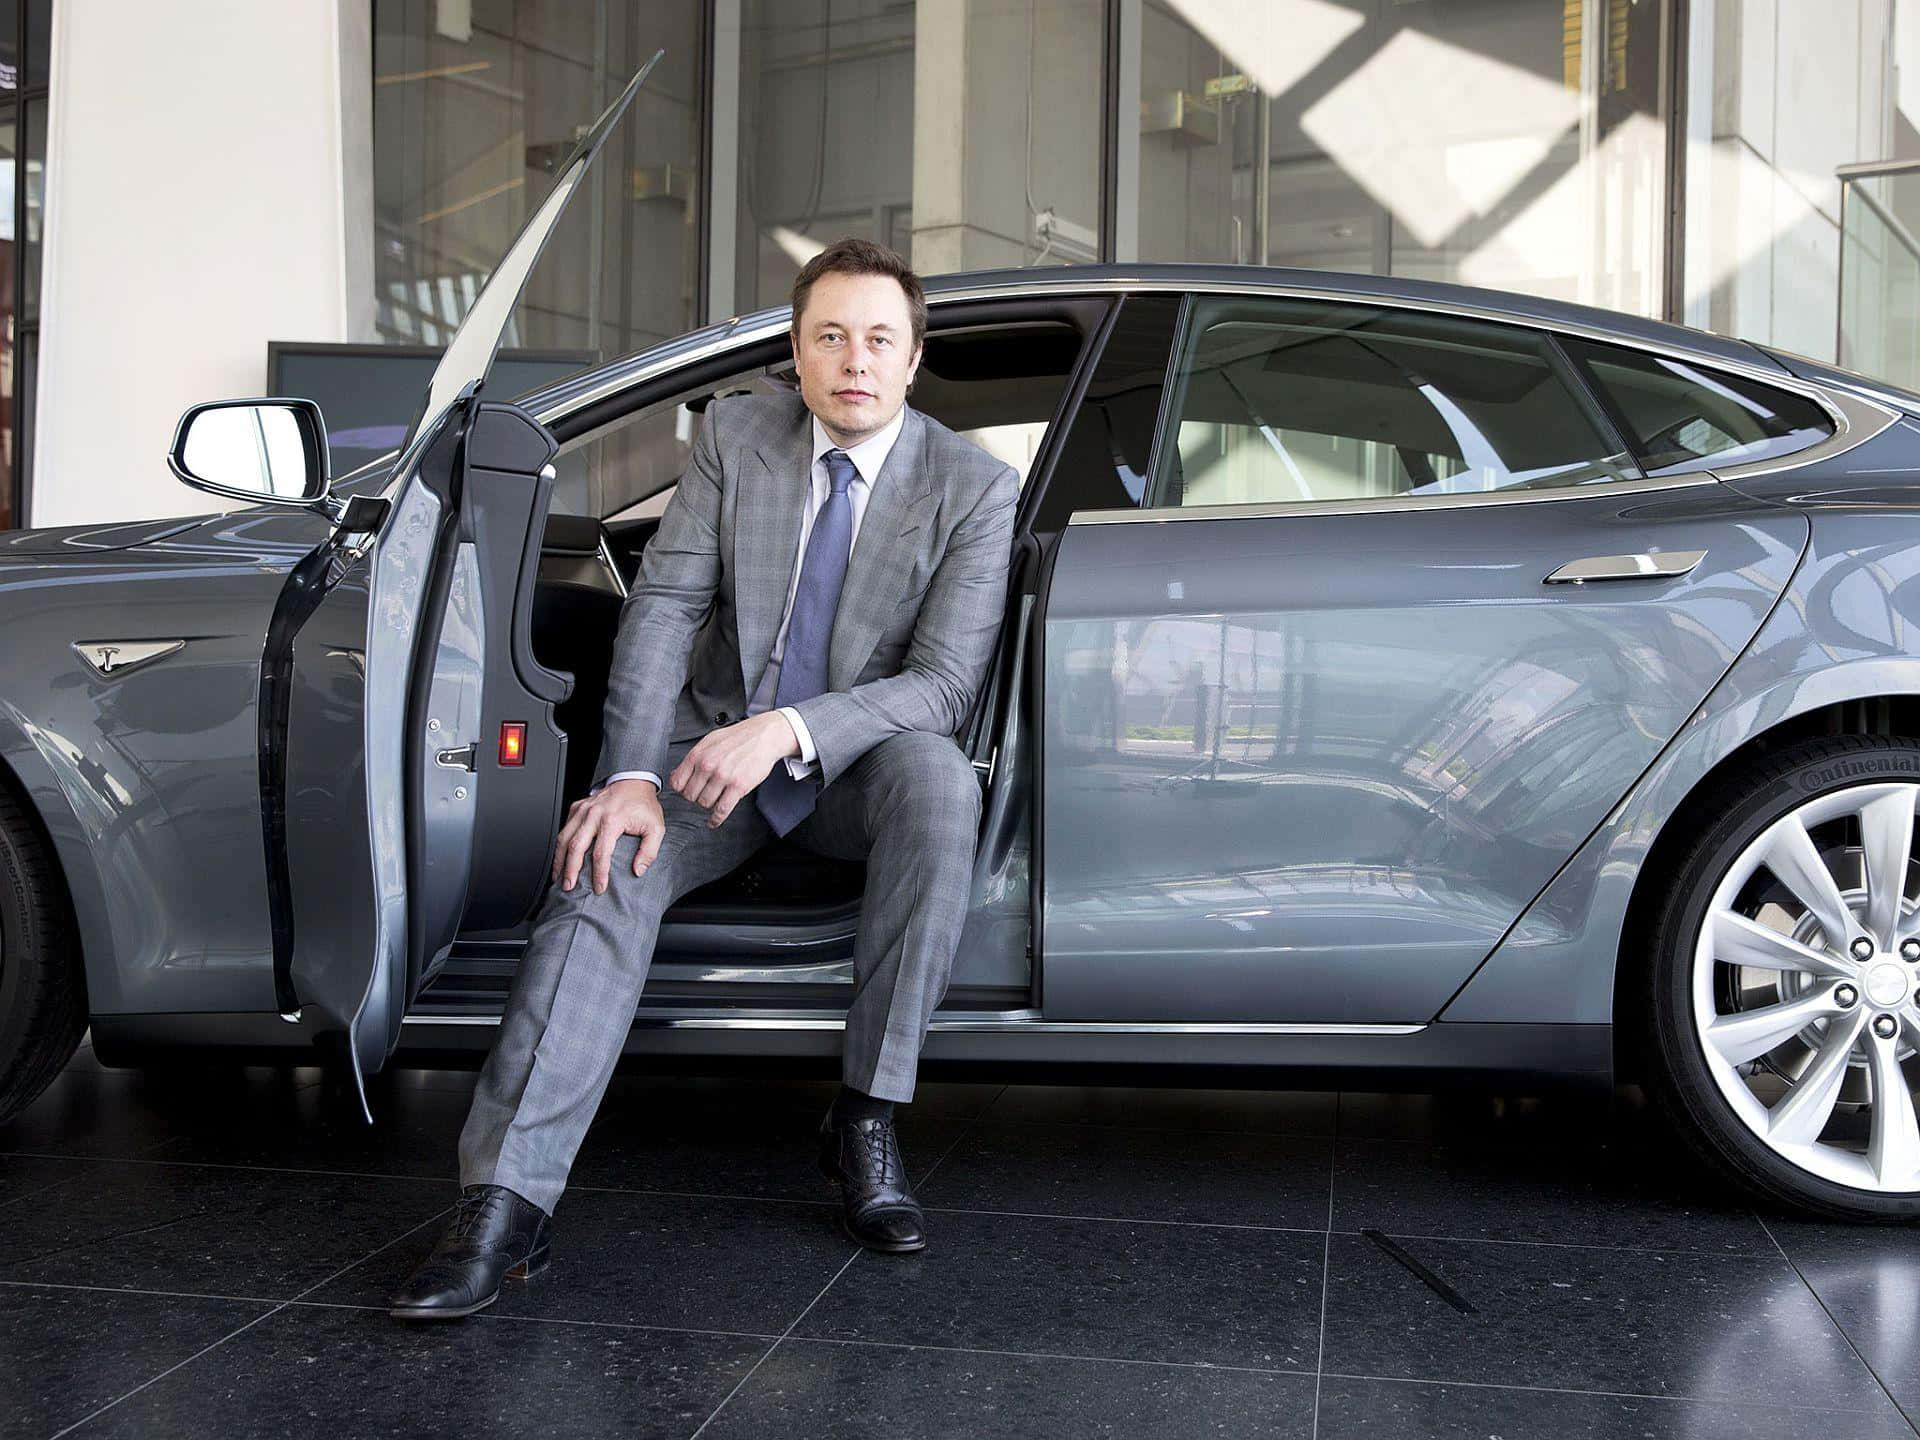 Elon Musk, the entrepreneur spearheading industry-disrupting innovations